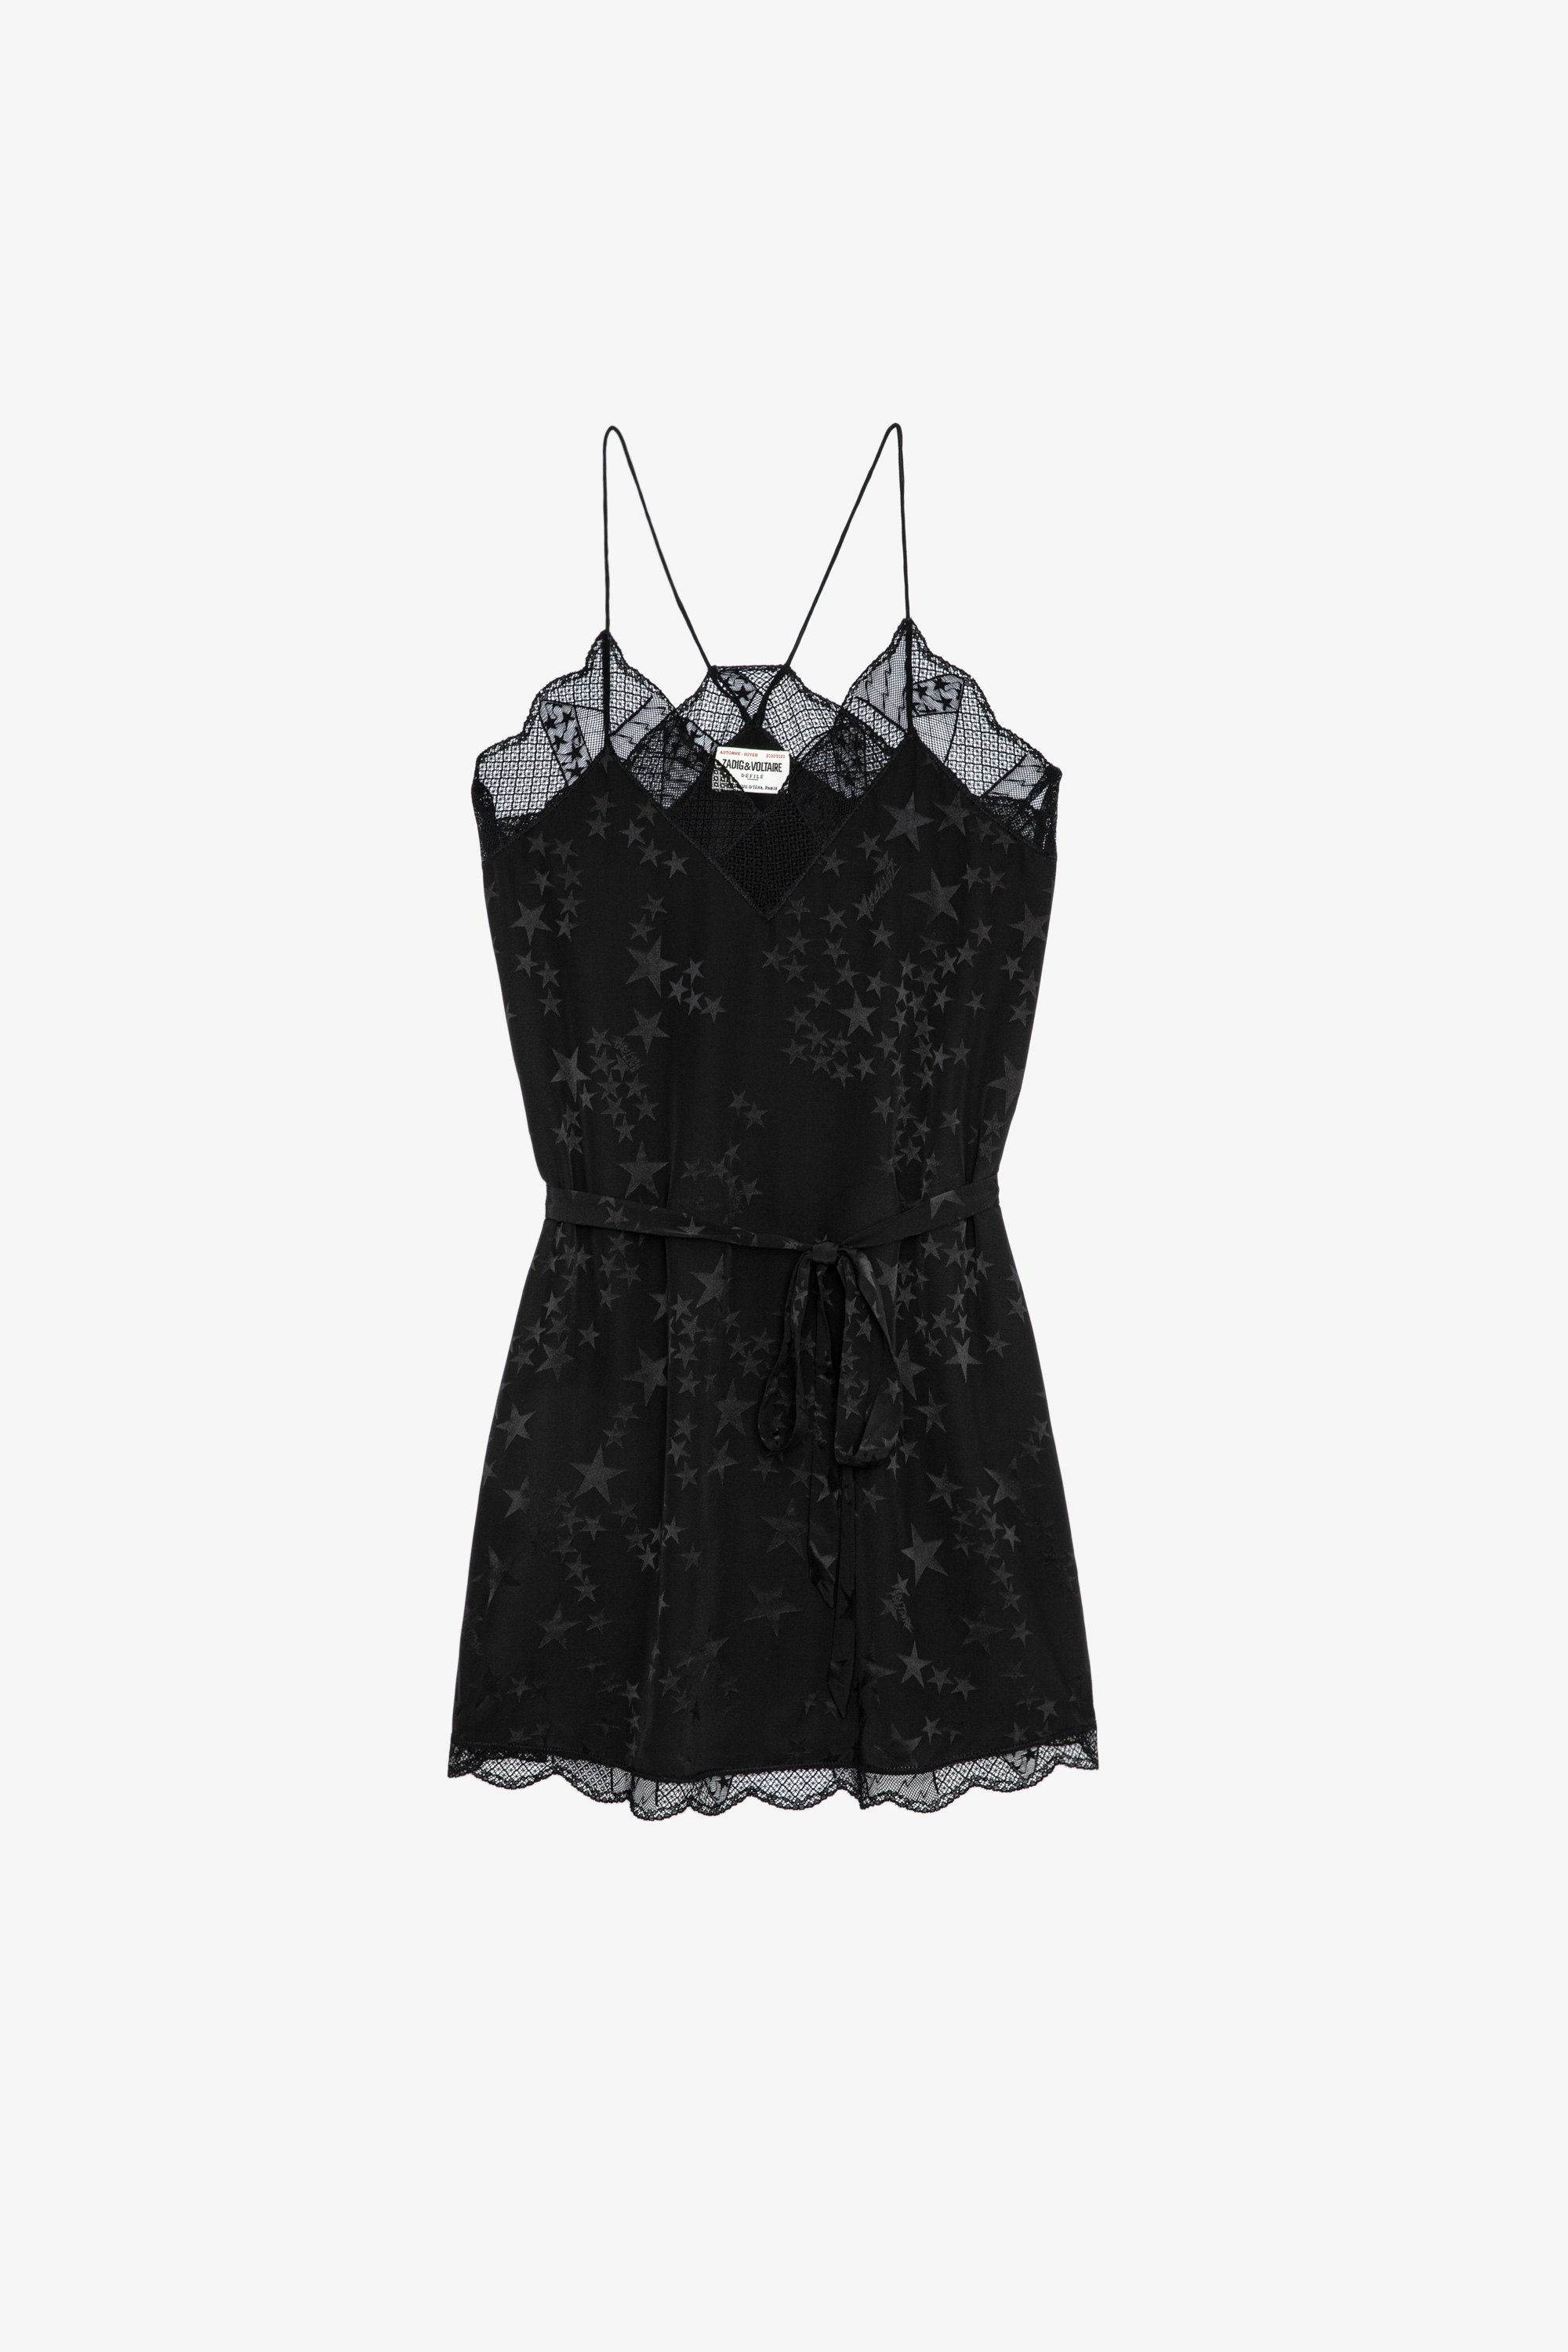 Ristyz Jac Stars ワンピース Women’s star-studded black silk jacquard mini dress tied at the waist with lace trim